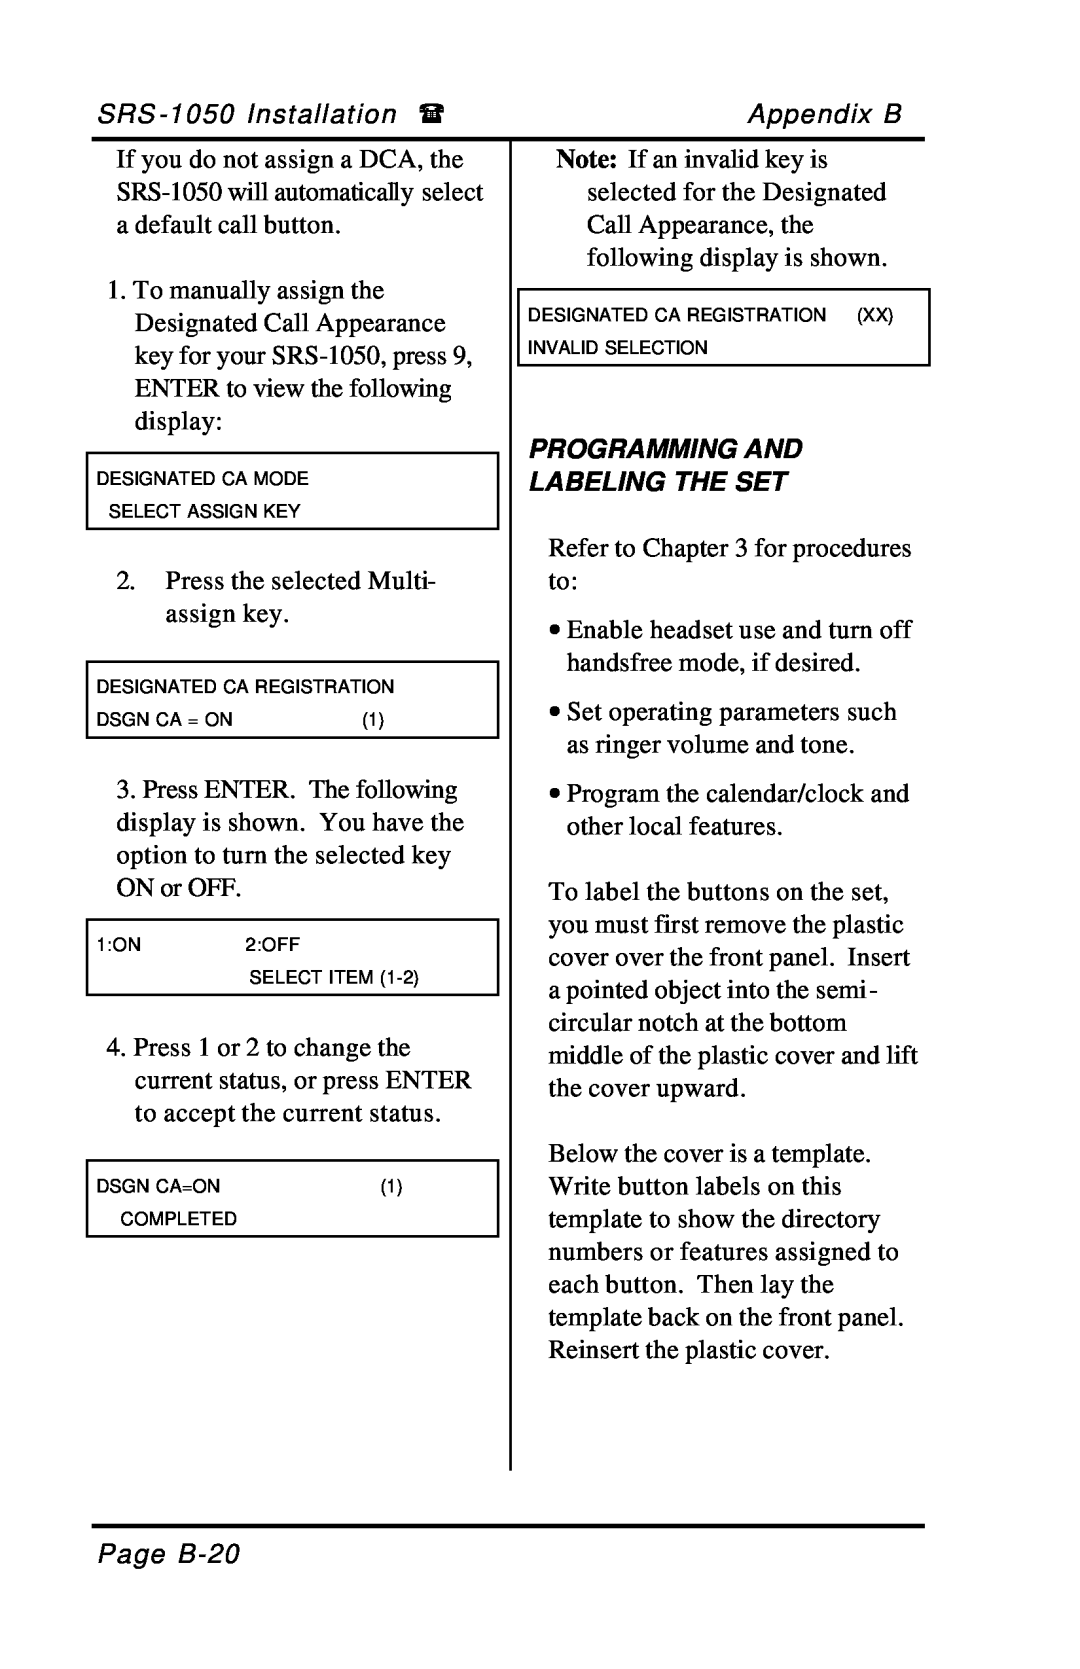 Fujitsu SRS-1050 manual Programming And Labeling The Set, SRS -1050 Installation, Appendix B, Page B-20 